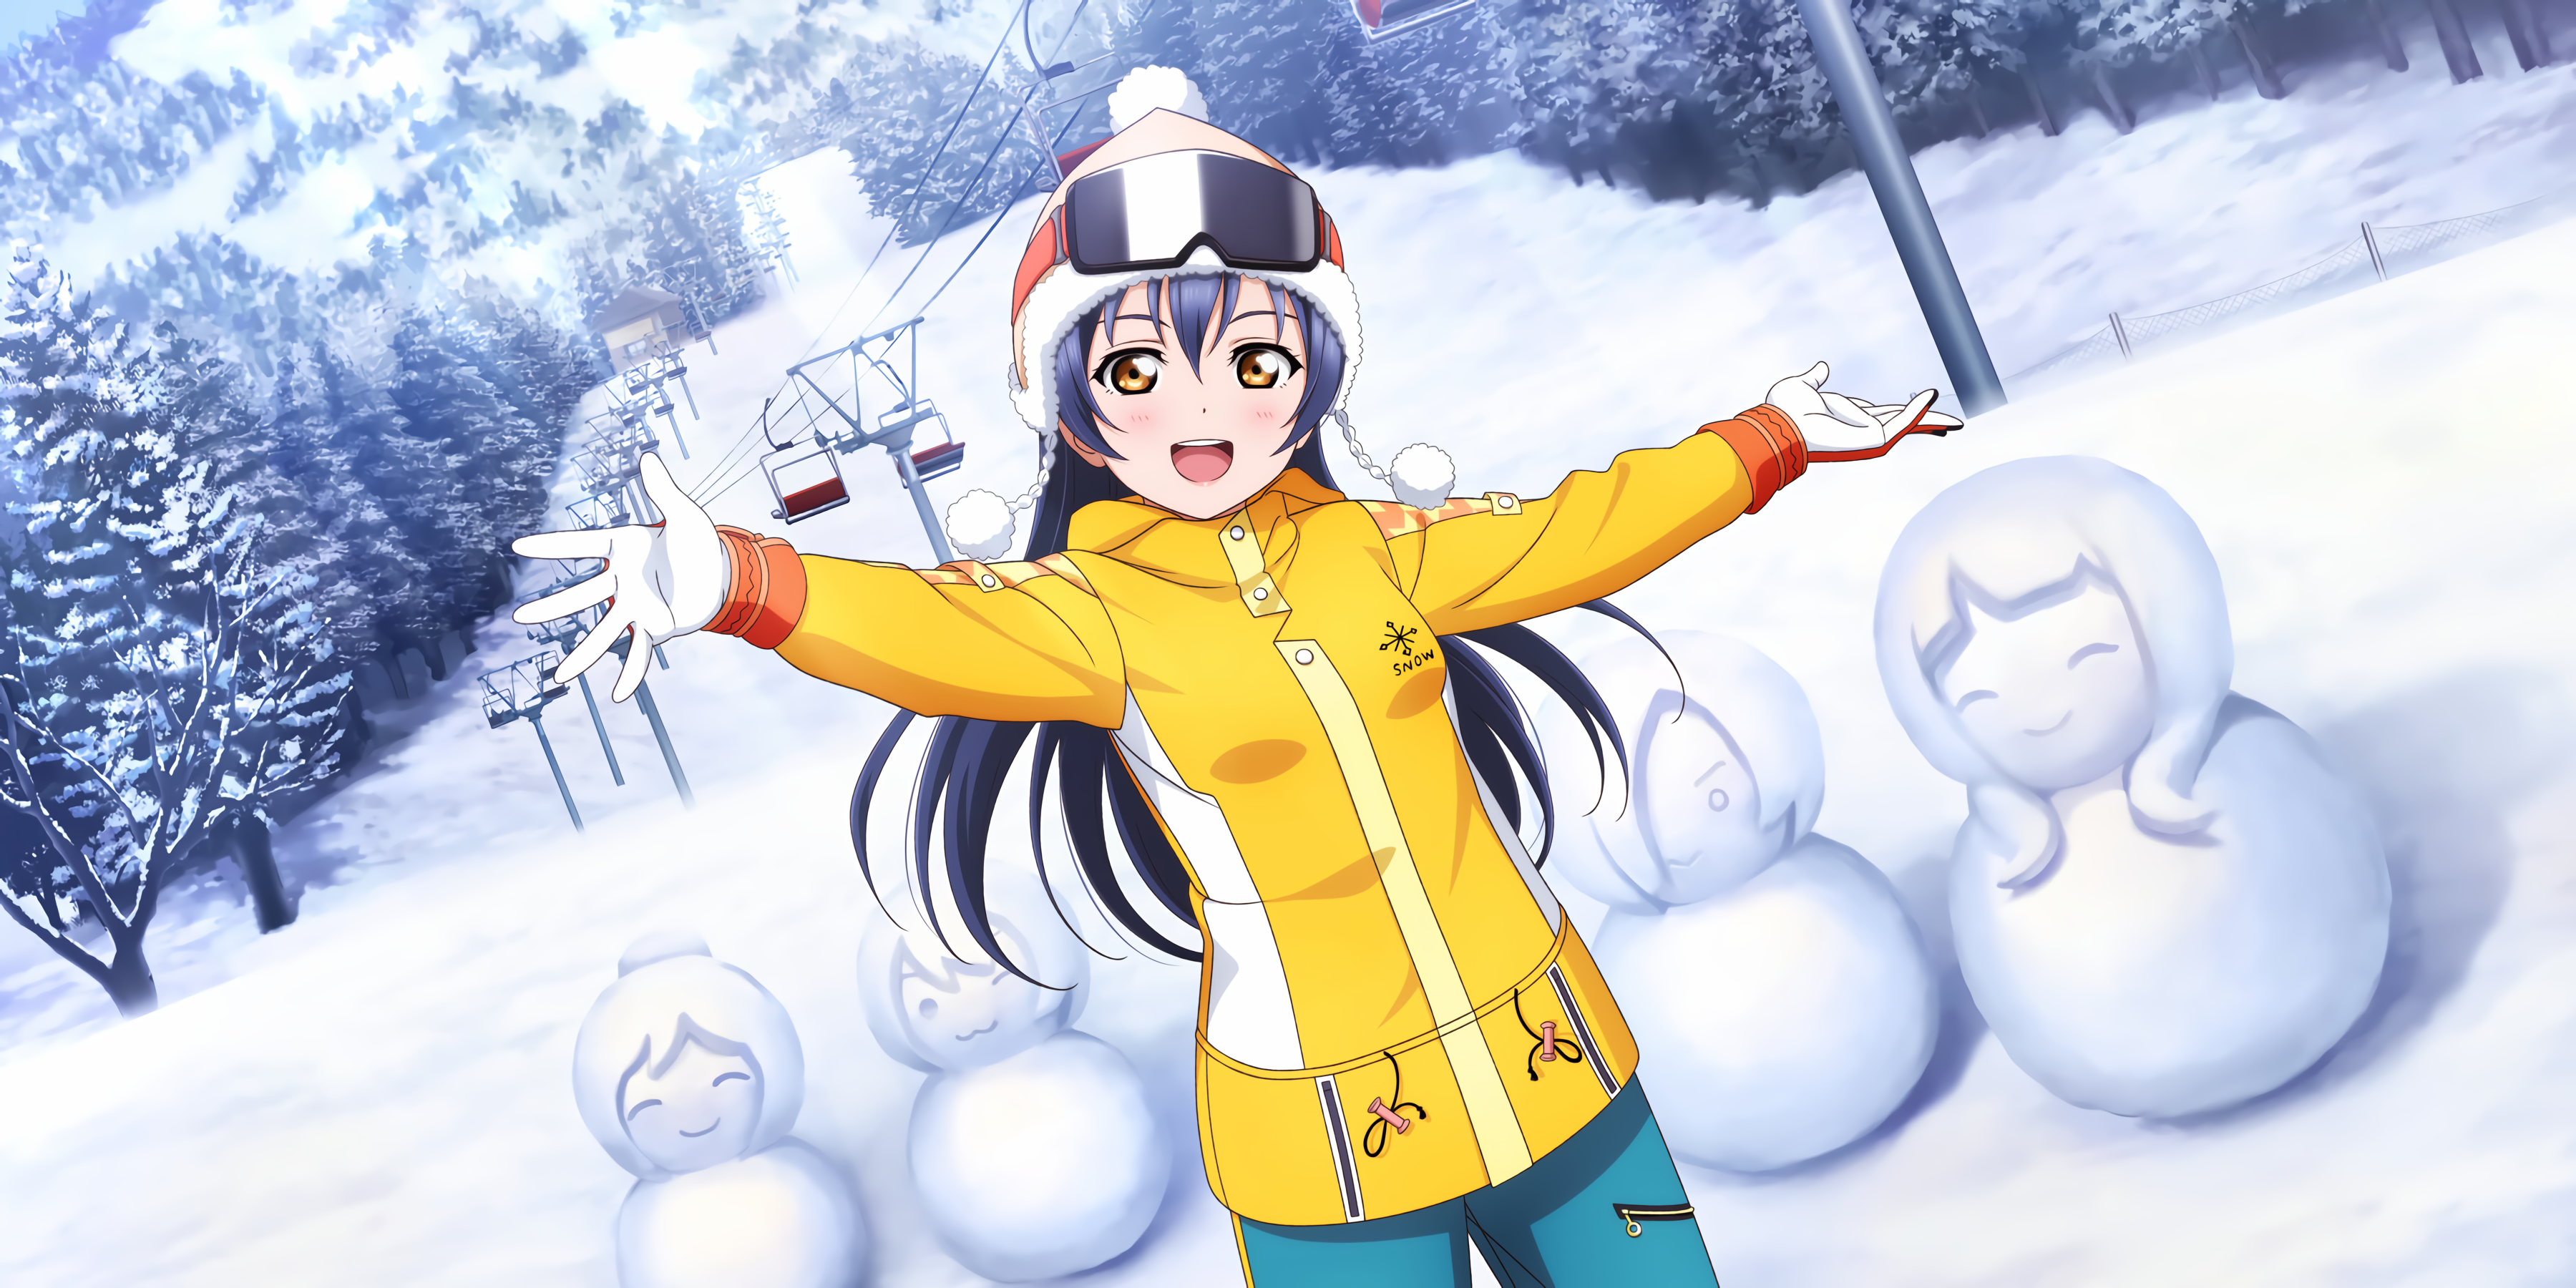 Sonoda Umi Love Live Anime Anime Girls Snow Snowman Trees Hat Gloves 3600x1800